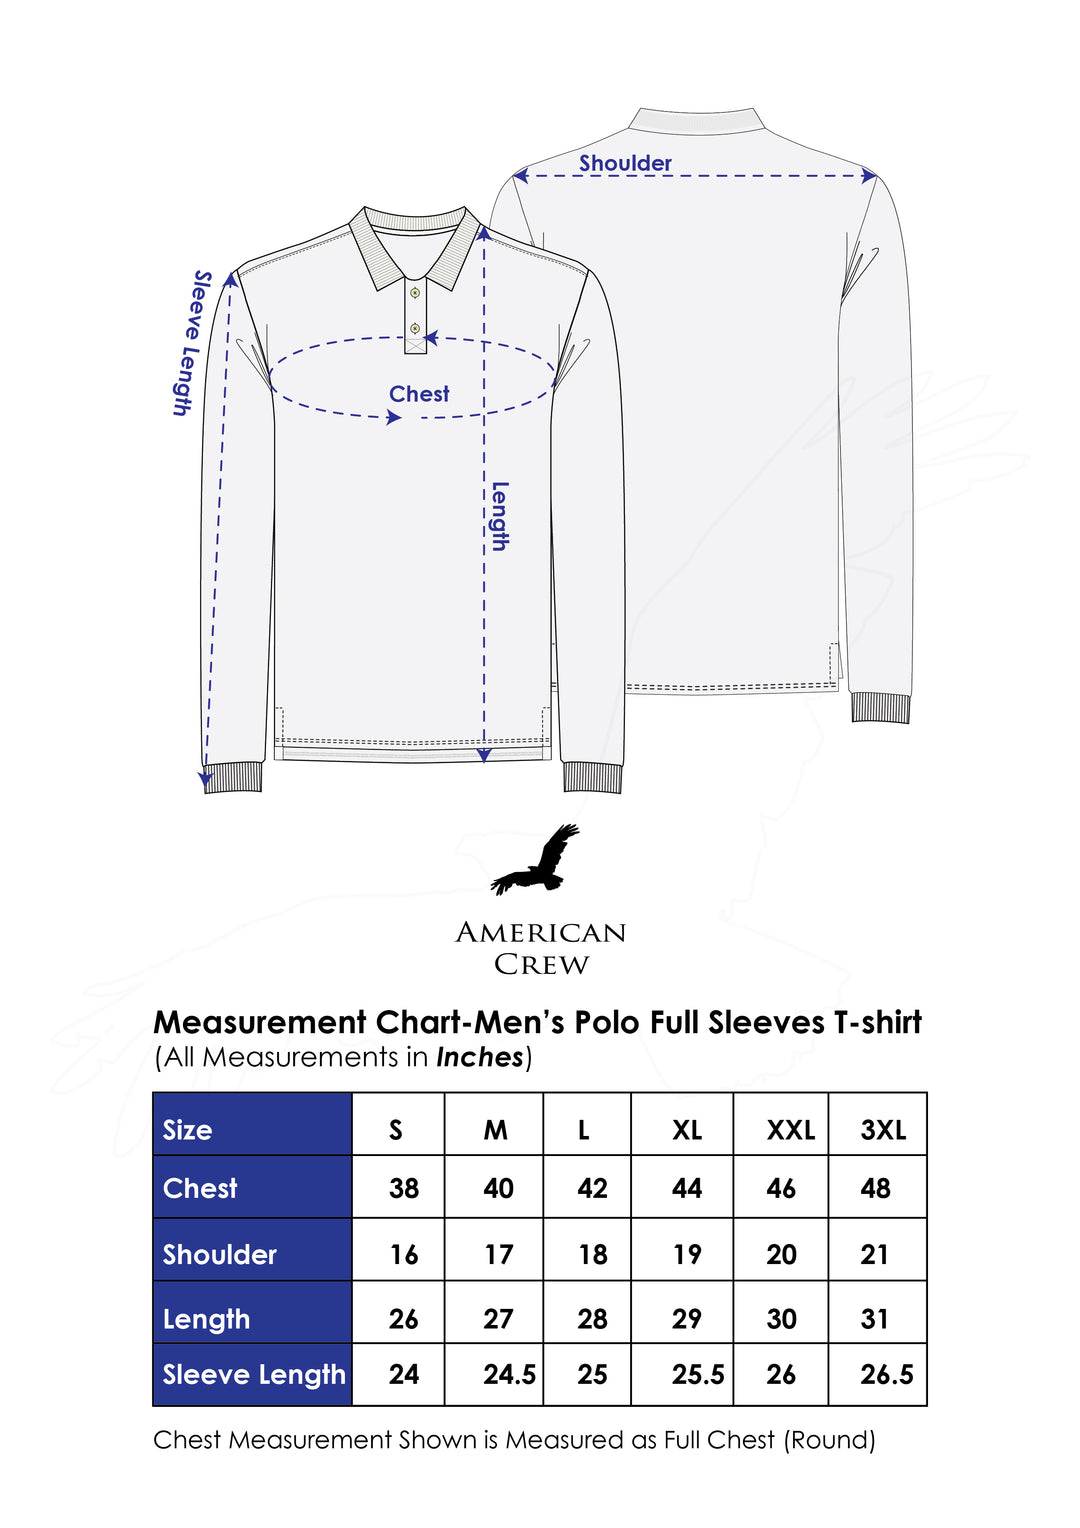 Men's Polo Collar Full Sleeves Yarn Dyed Striped T-Shirt - Black / Blue / White